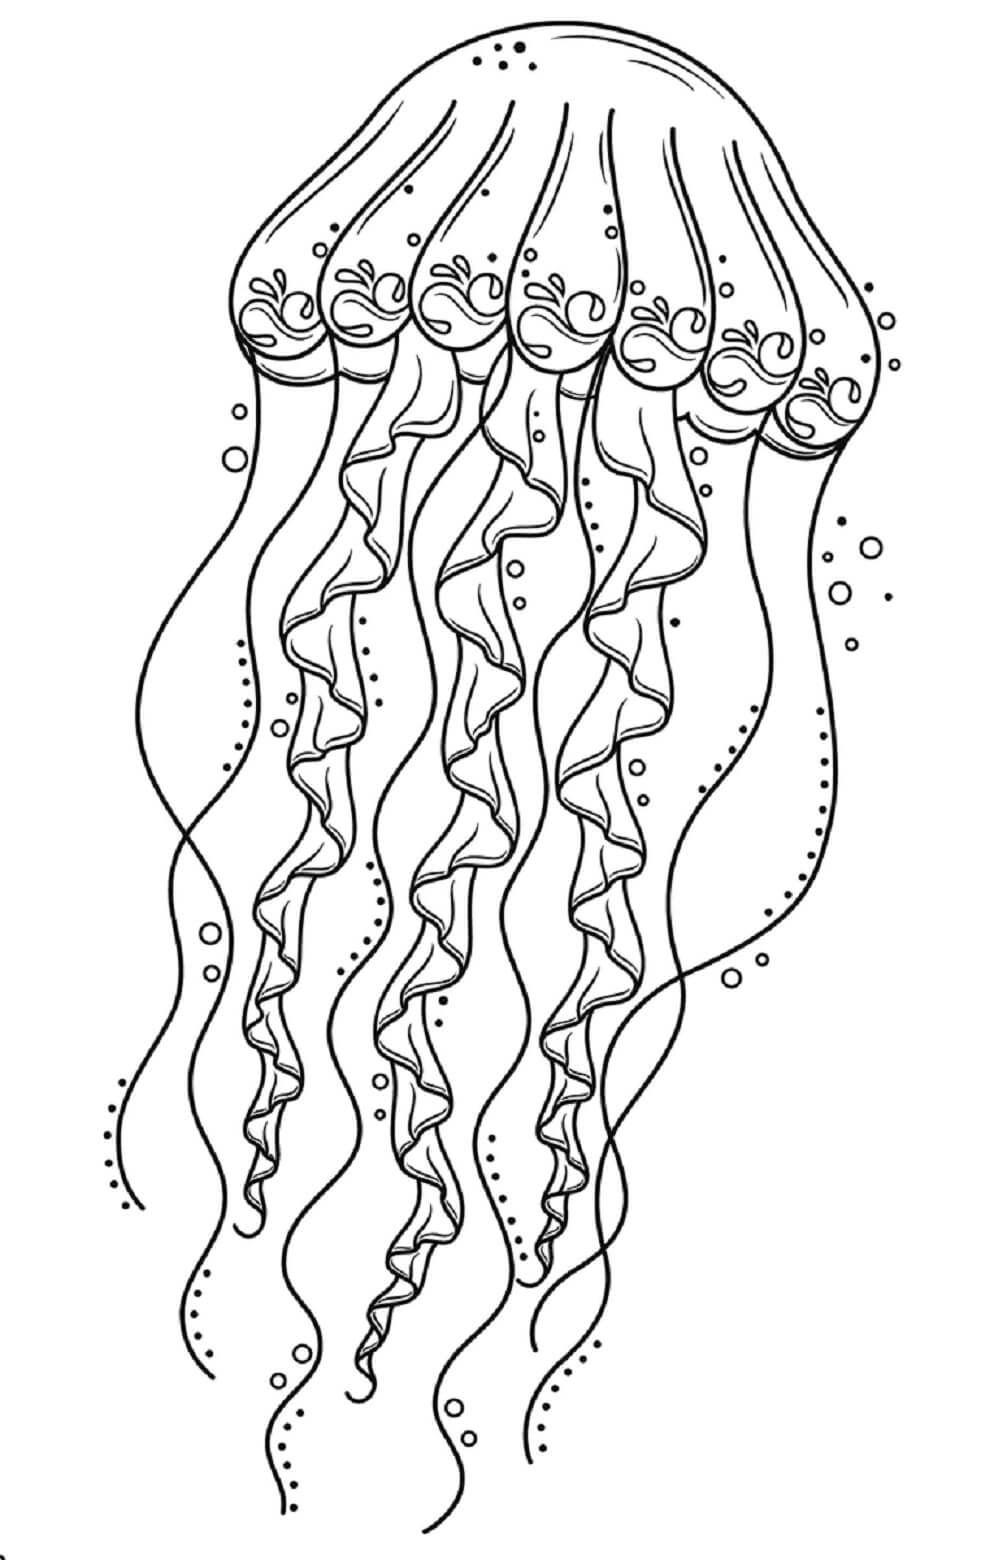 Mandala Jellyfish Coloring Page - Sheet 4 Mandalas